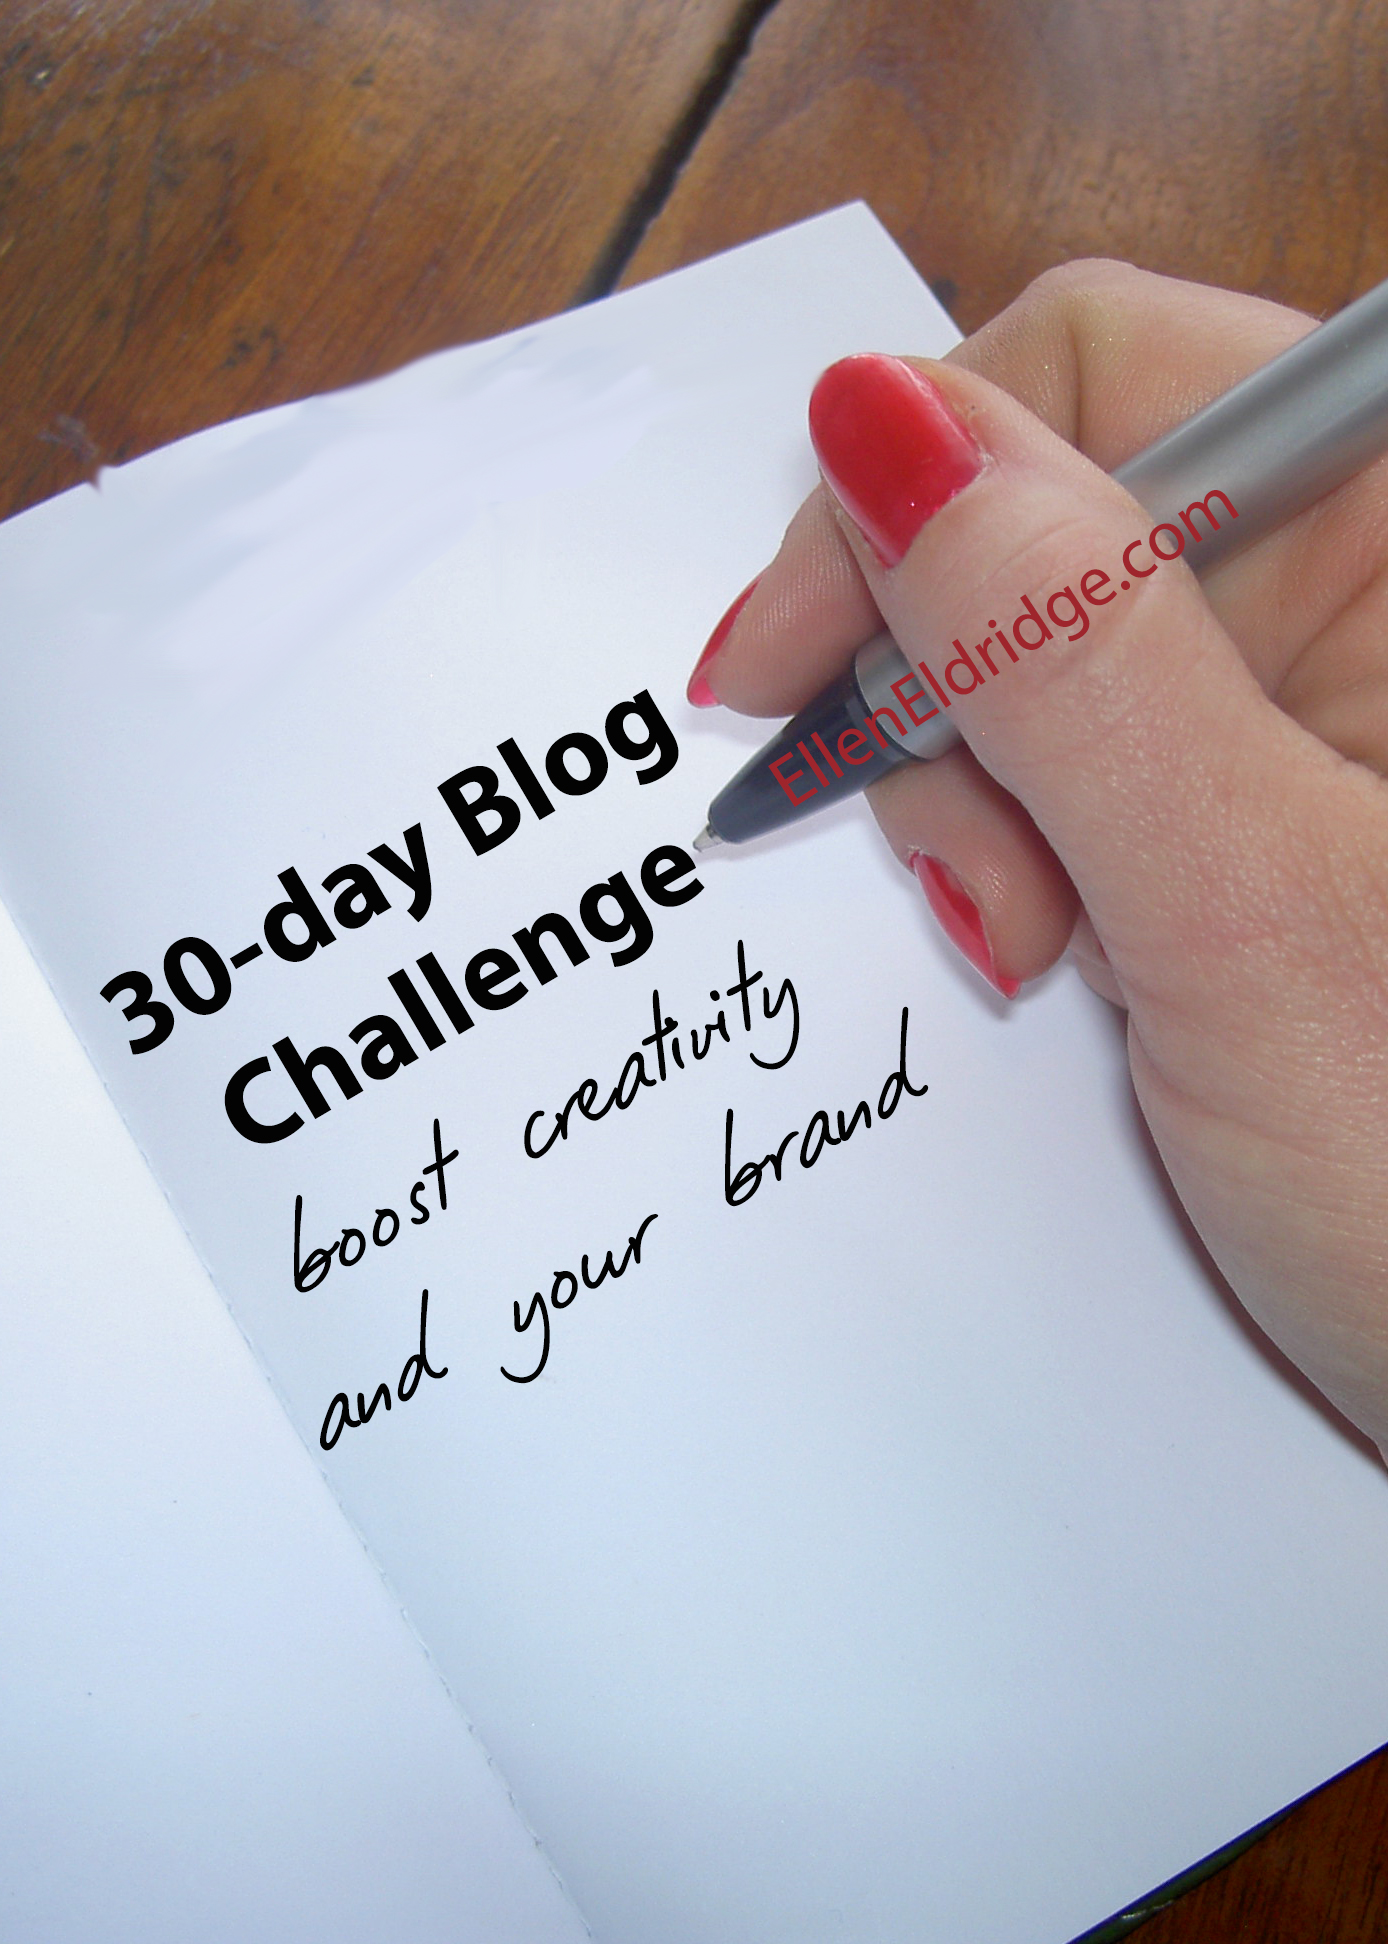 30-day blog challenge